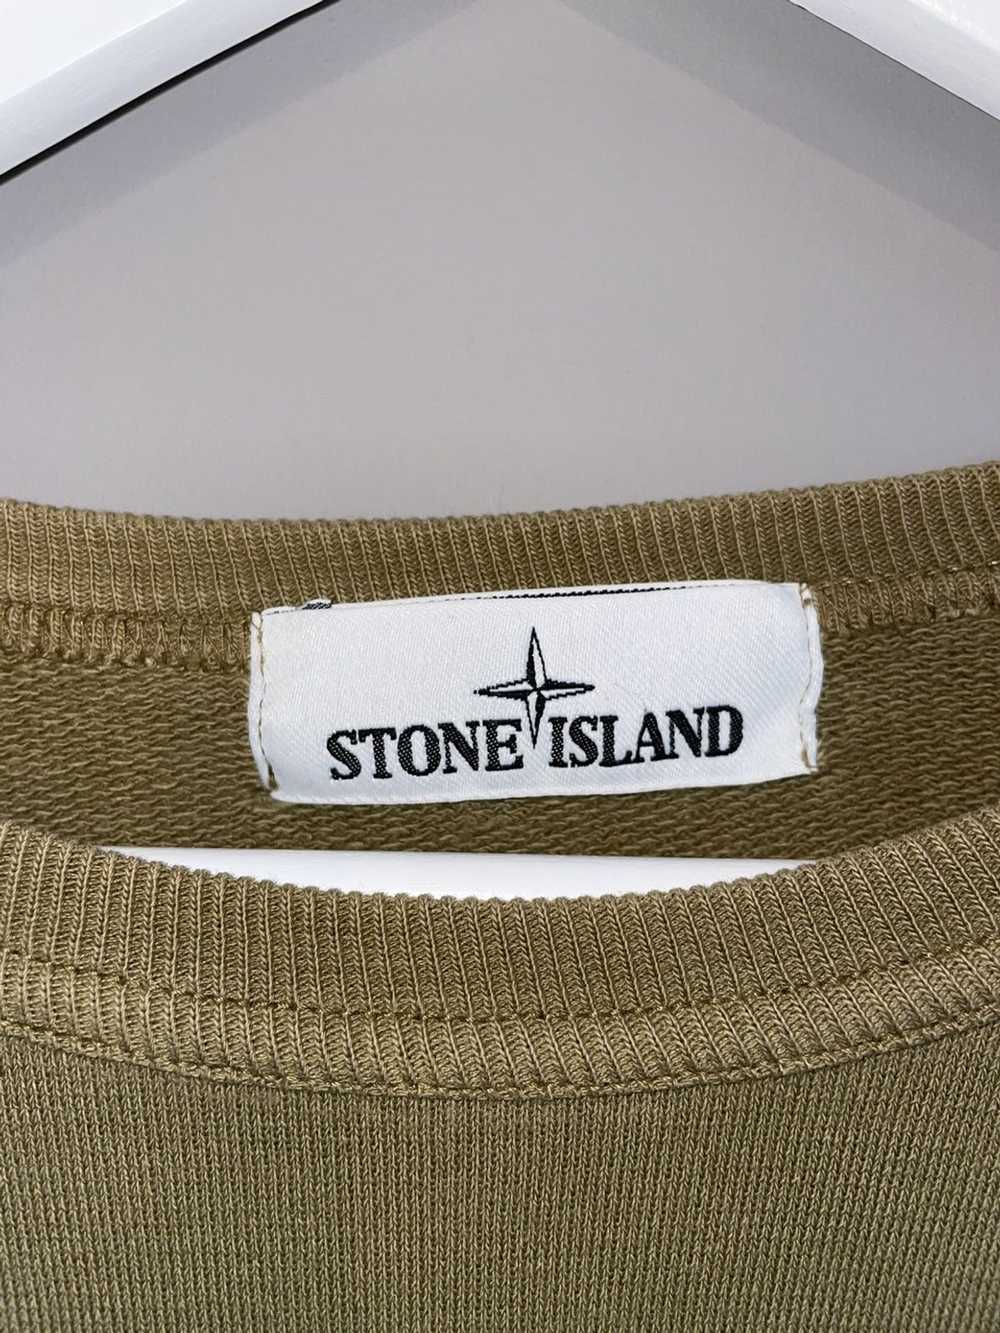 Stone Island Stone Island Sweatshirt Green M - image 3